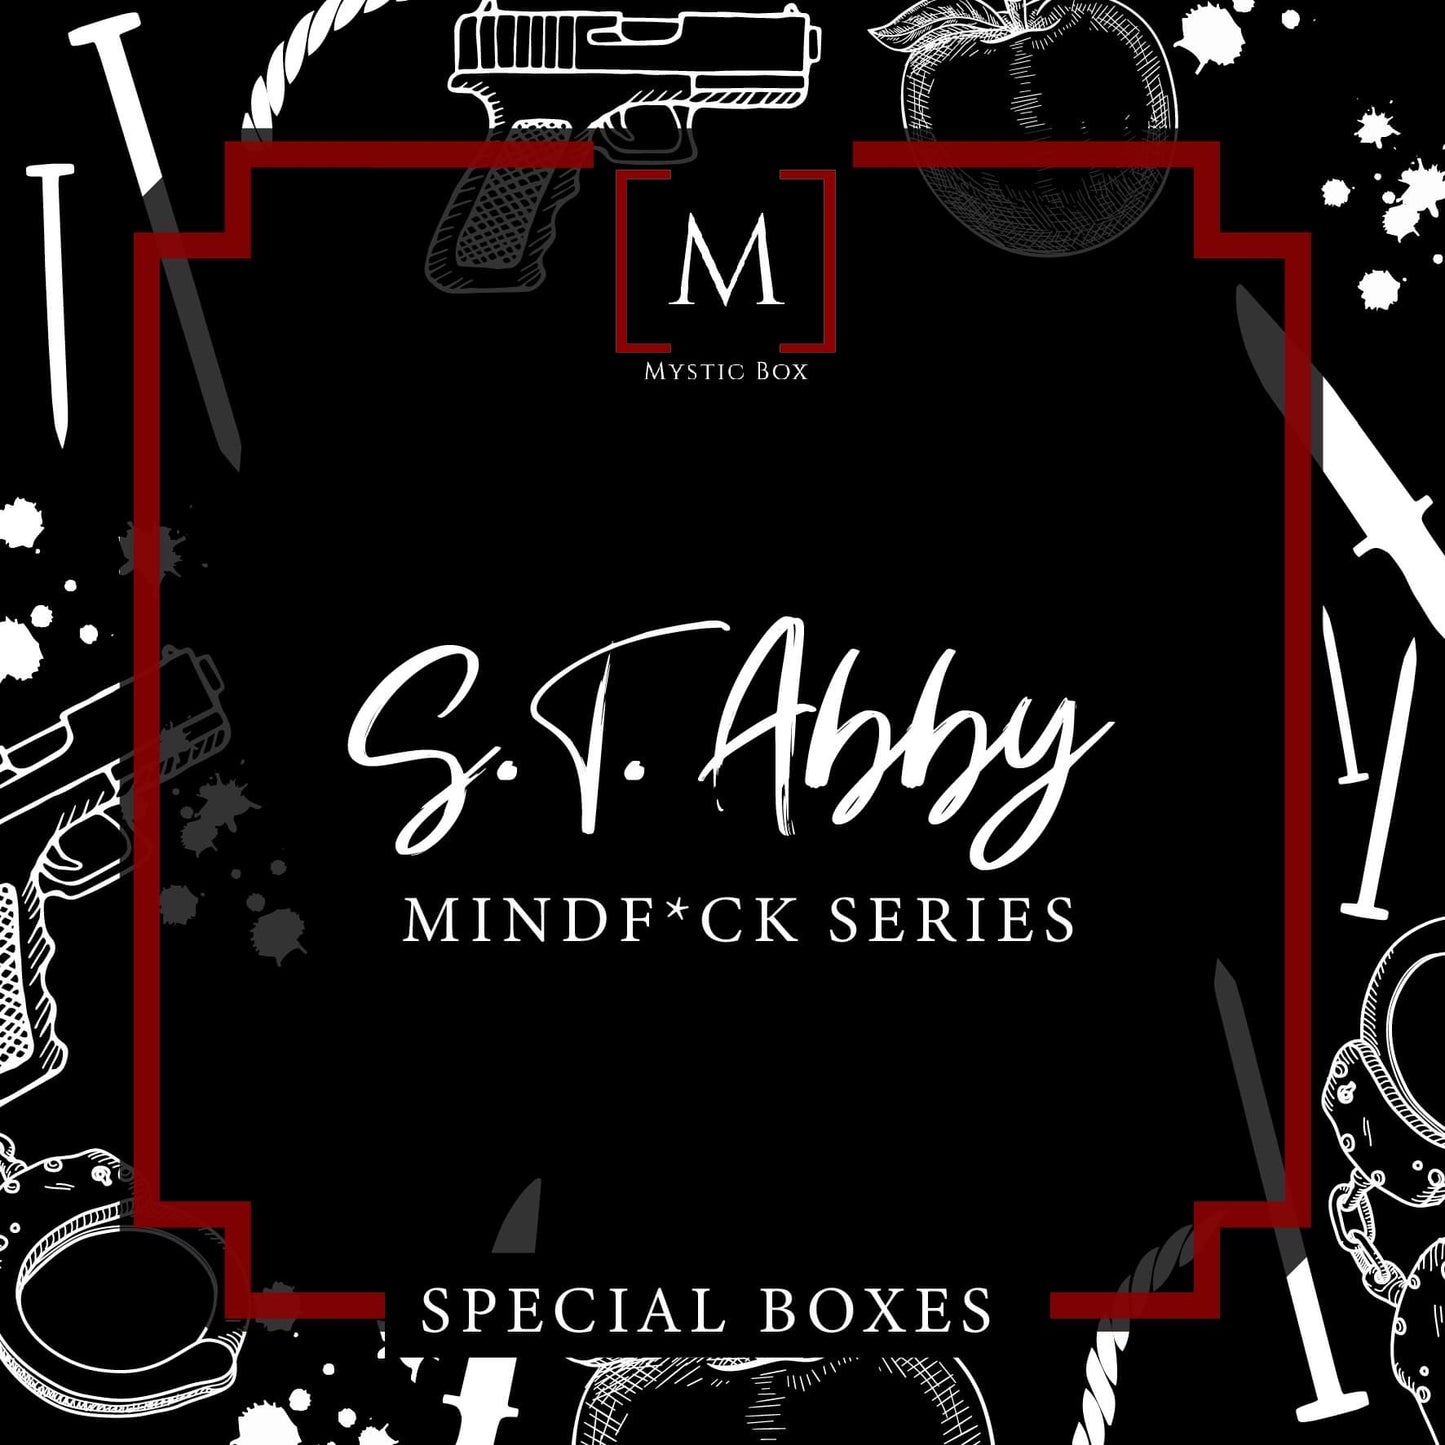 Mindf*ck by ST Abby (Final Sale)